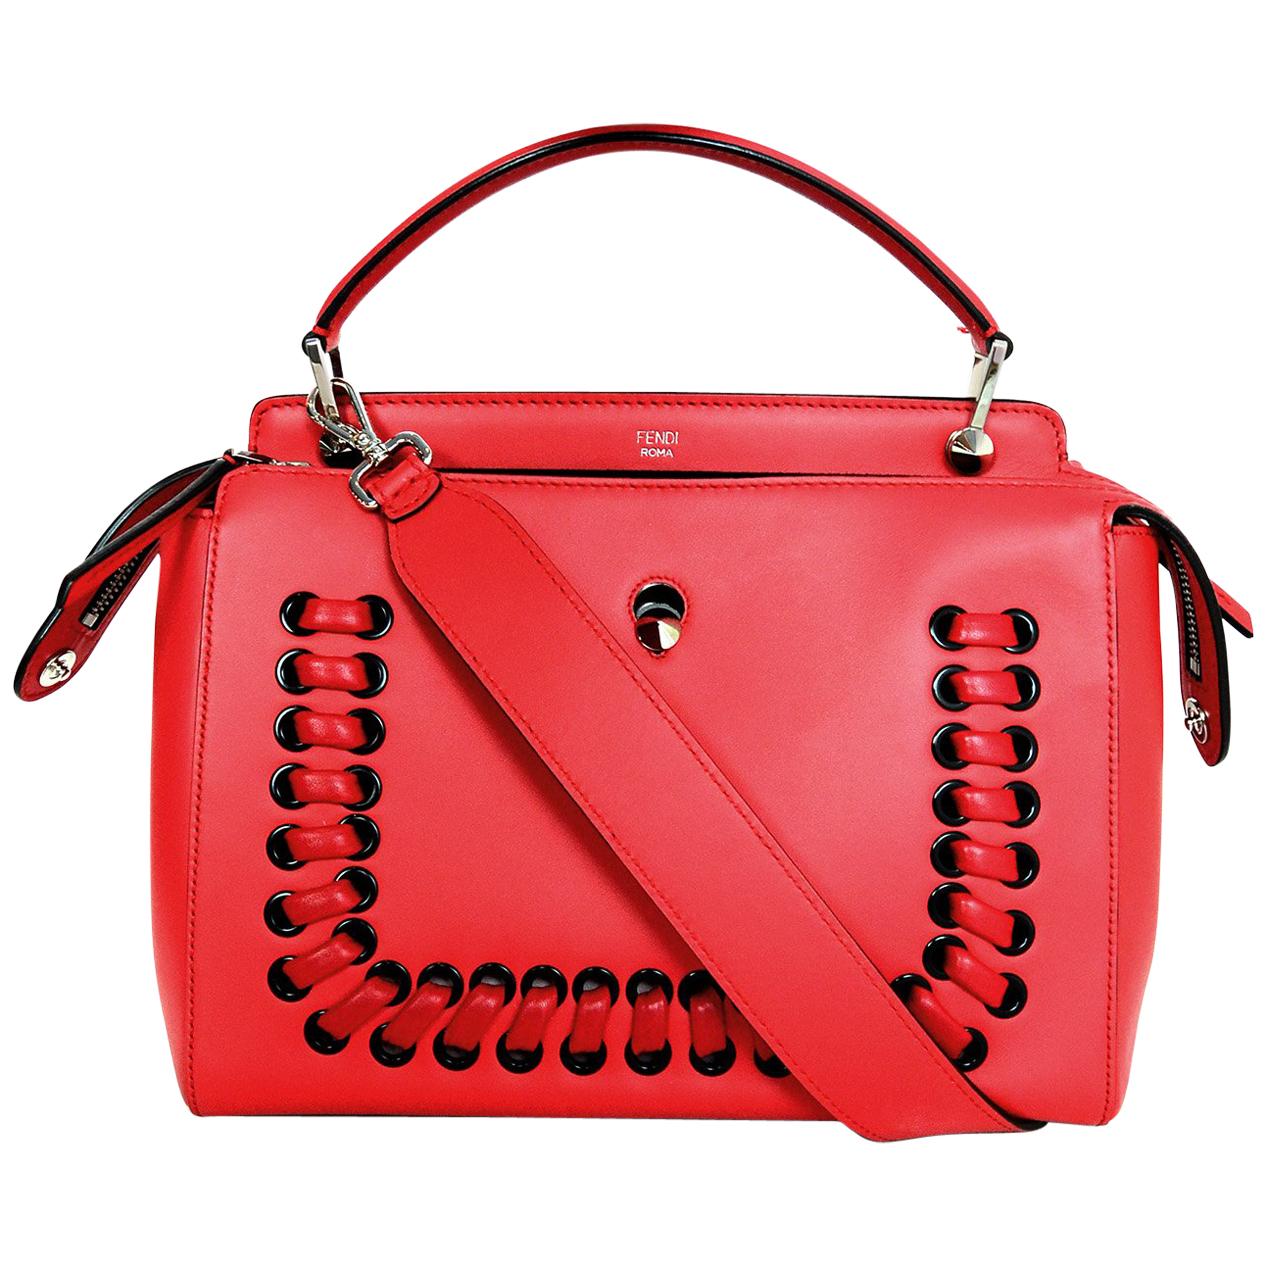 Fendi Red Nappa Leather Whipstitch Fashion Show Dotcom Satchel Bag w/ Strap